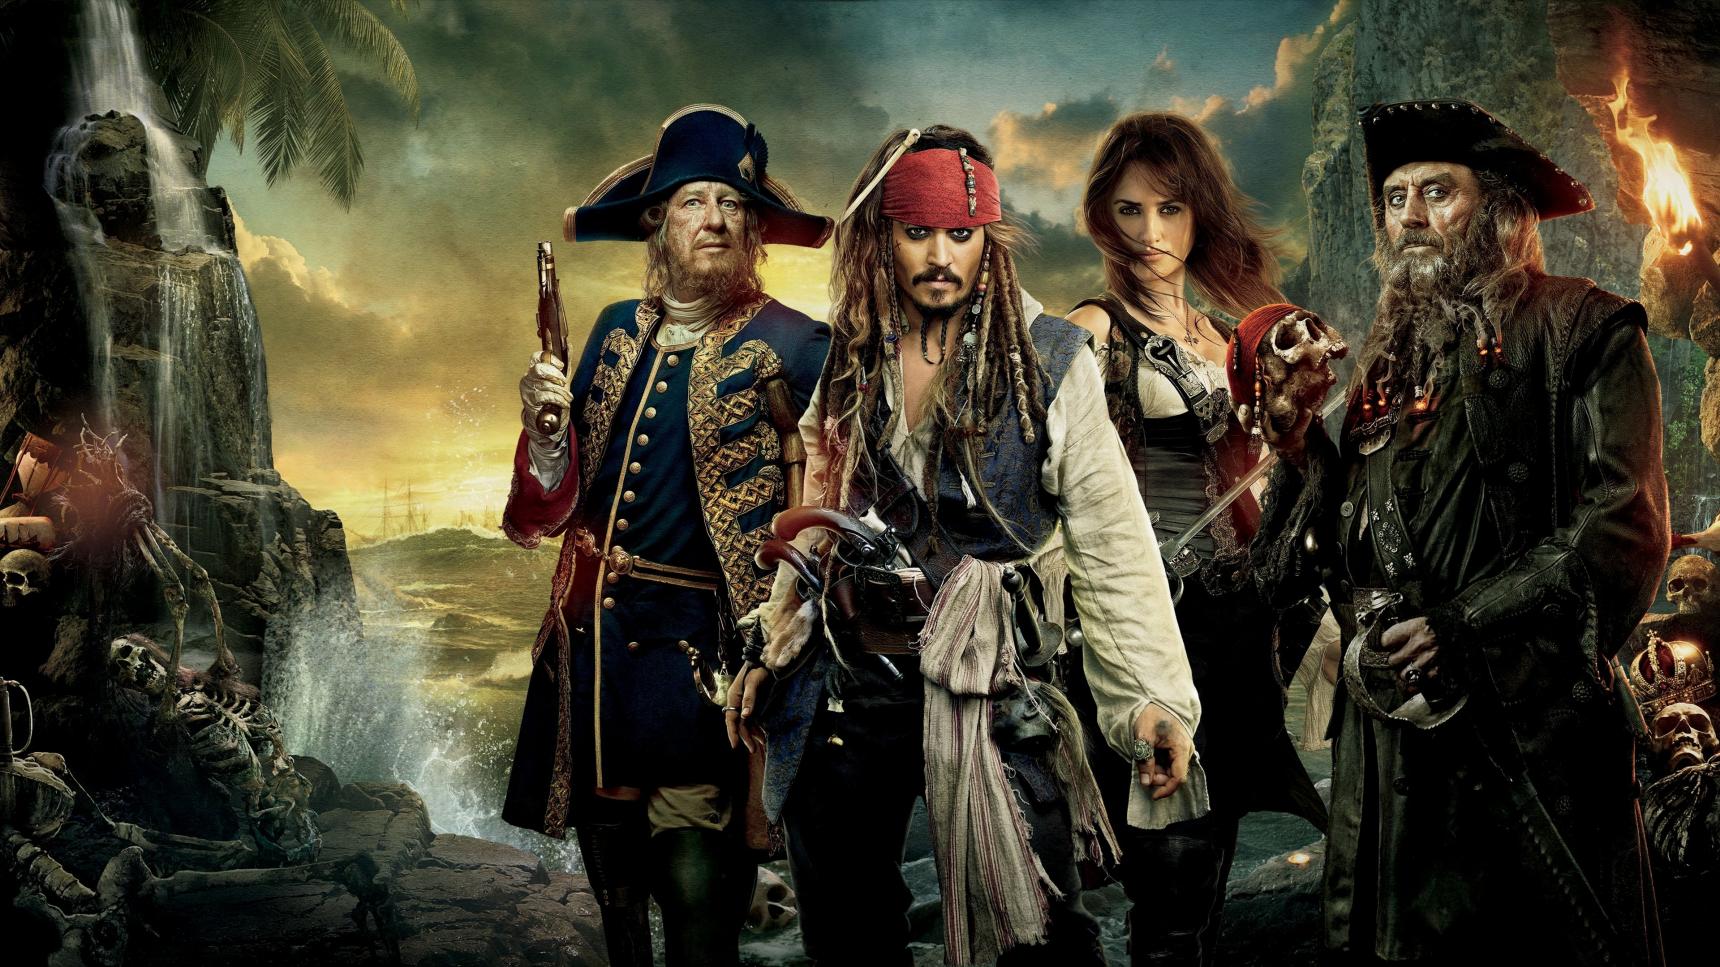 Fondo de pantalla de la película Piratas del caribe: Navegando aguas misteriosas en PELISPEDIA gratis